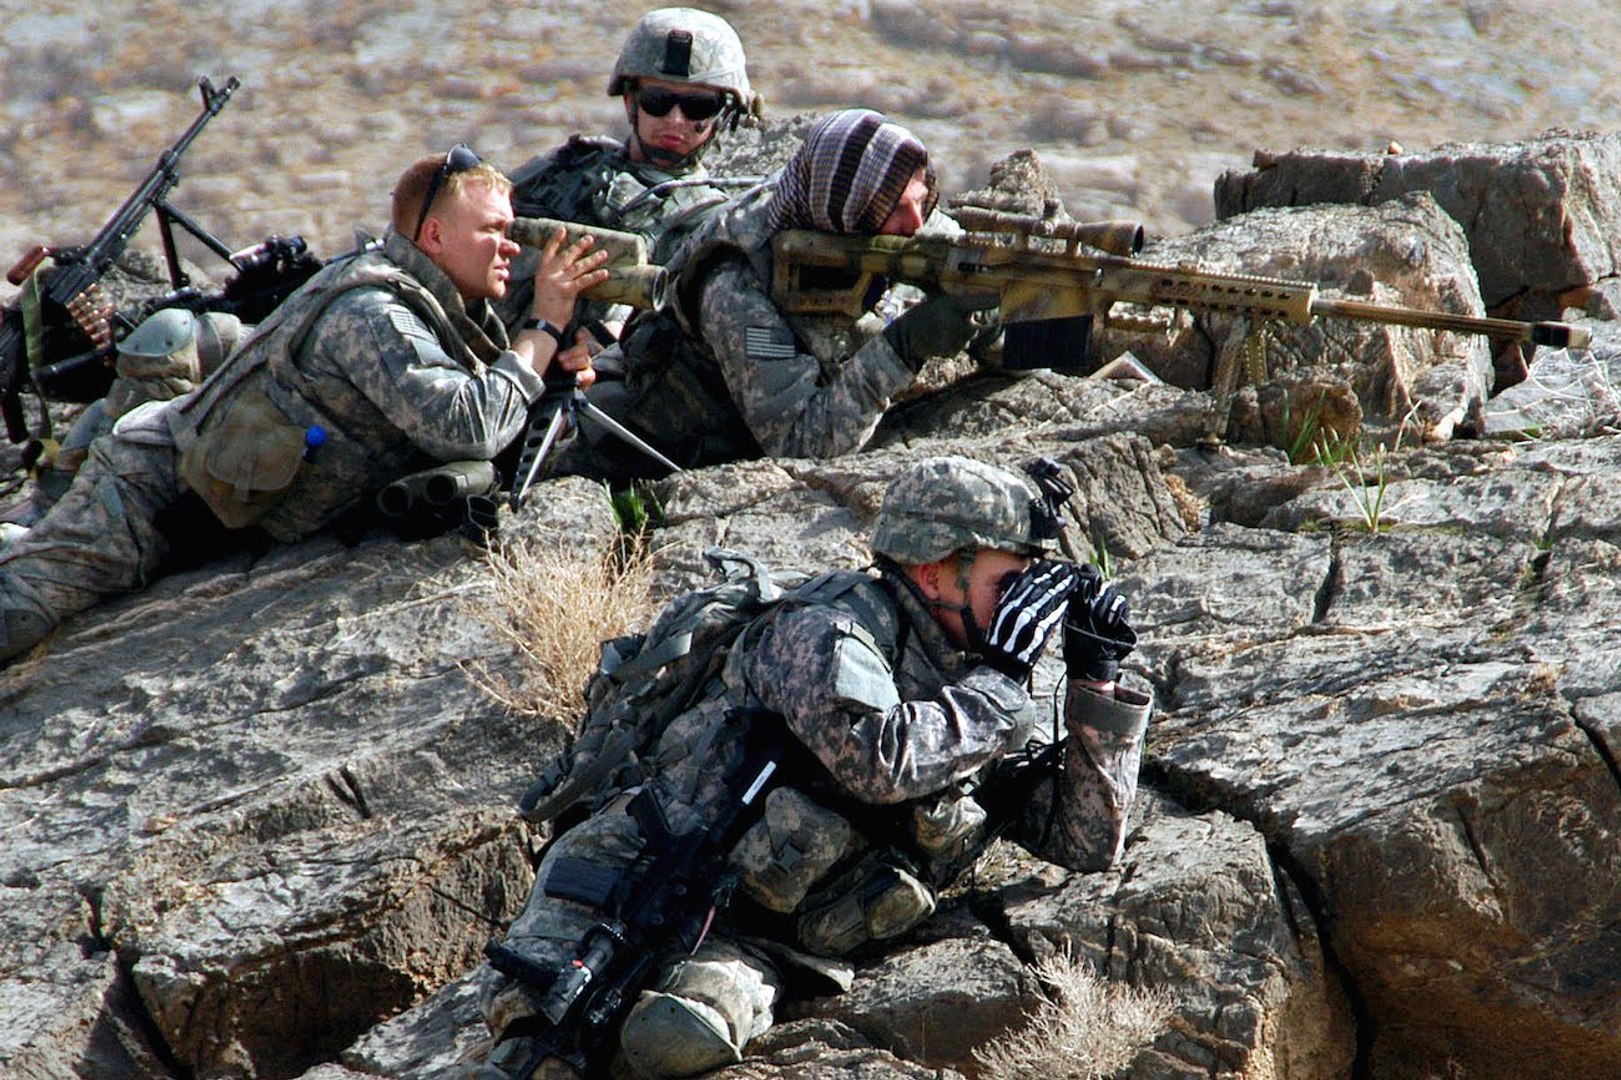 Watch a Marine sniper engage Taliban with Barrett M107 .50 cal rifle